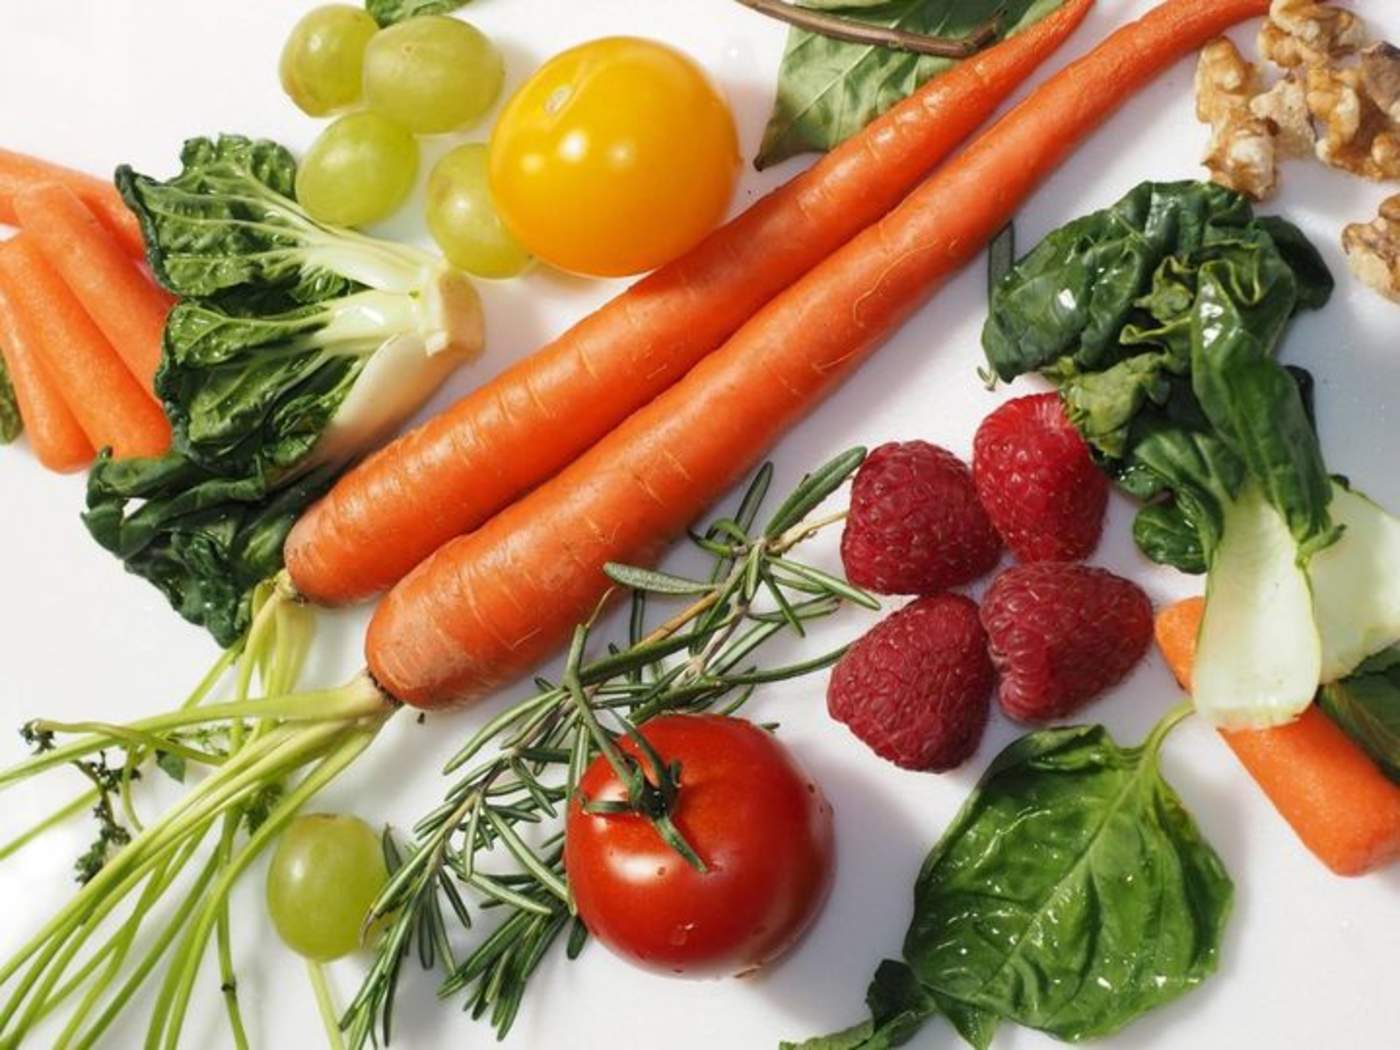 Consumir alimentos con vitamina A es más beneficioso que tomar suplementos de esta vitamina. (ARCHIVO)